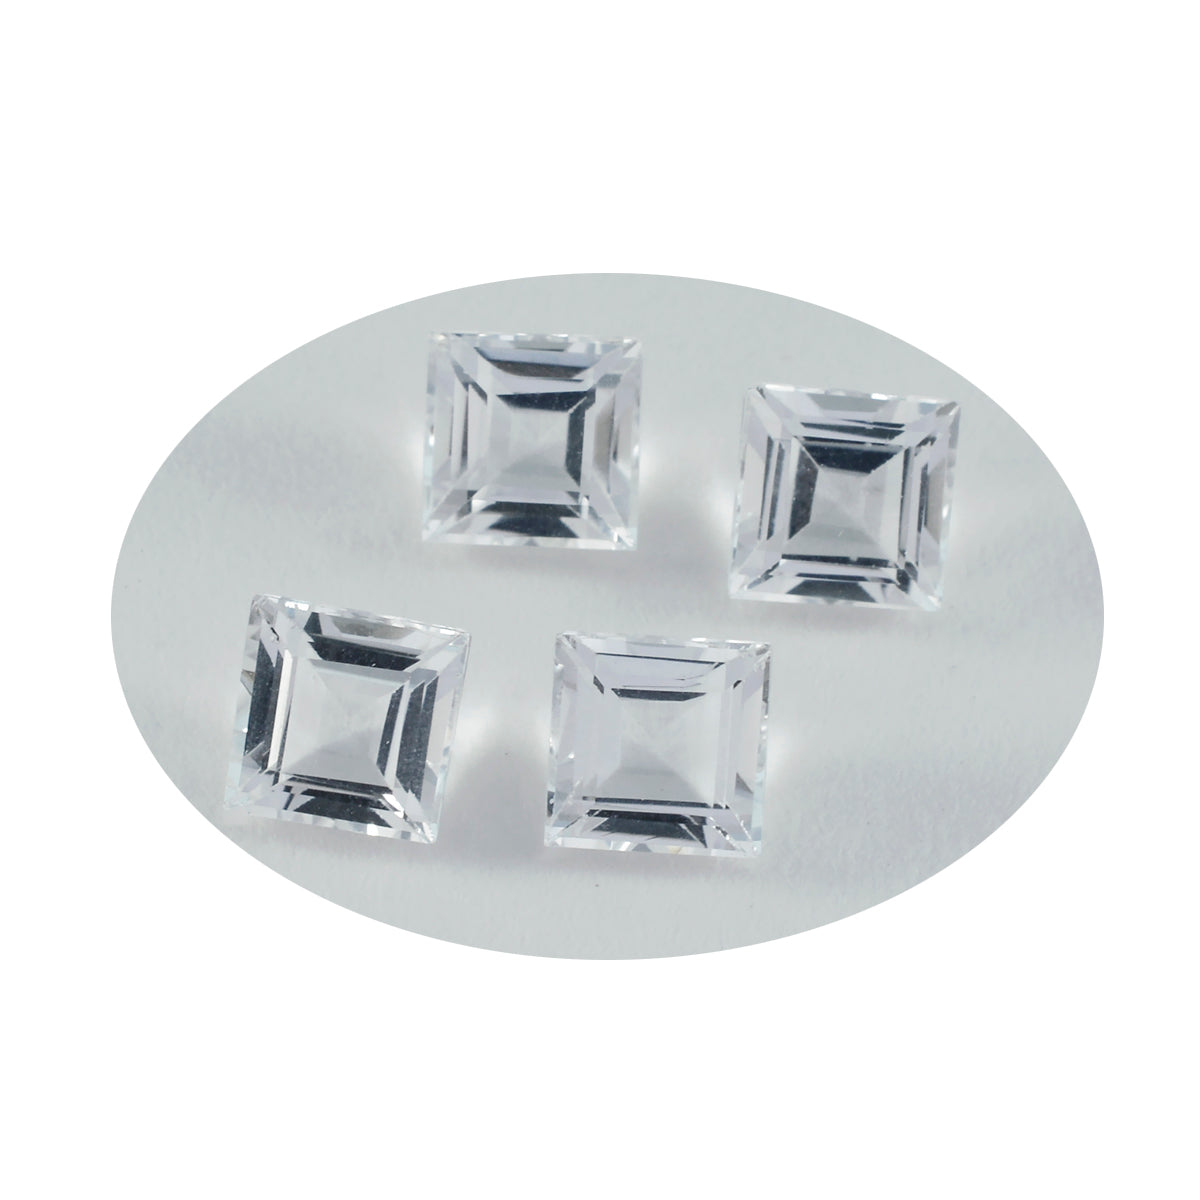 Riyogems 1PC wit kristalkwarts gefacetteerd 9x9 mm vierkante vorm uitstekende kwaliteit edelstenen